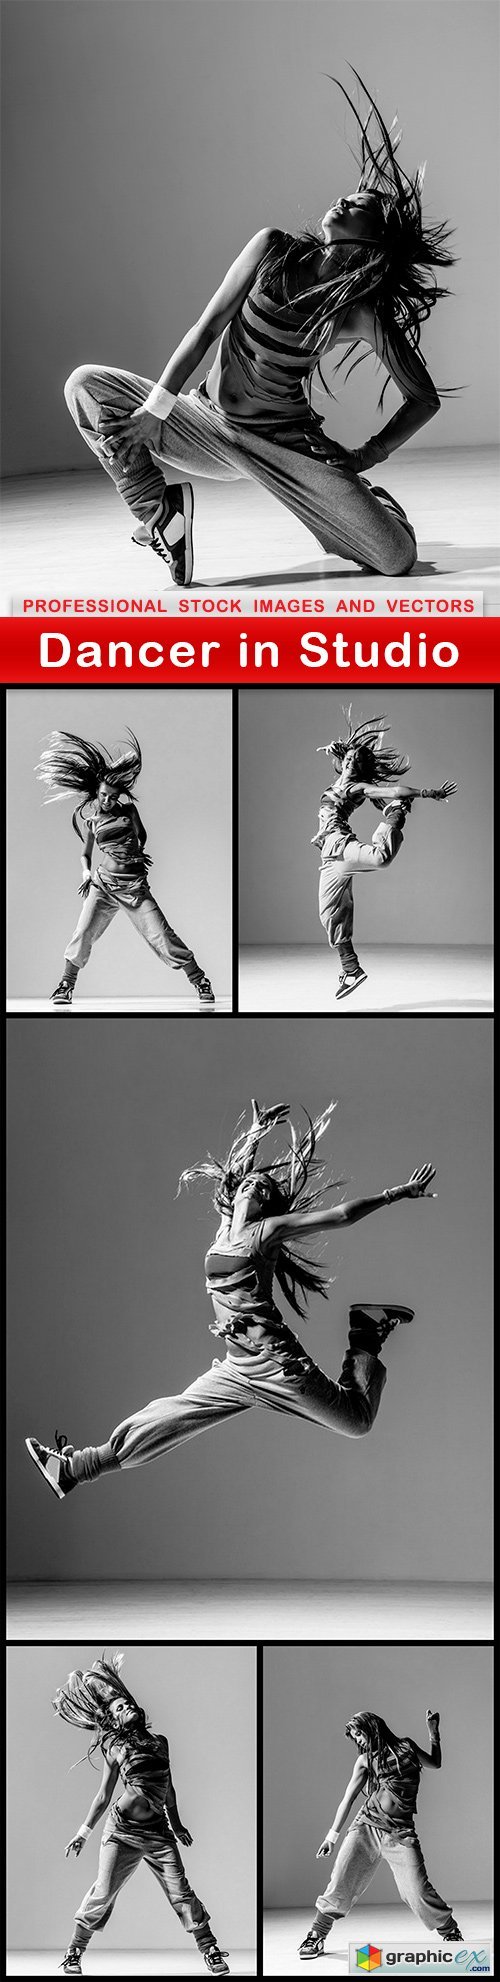 Dancer in Studio - 6 UHQ JPEG